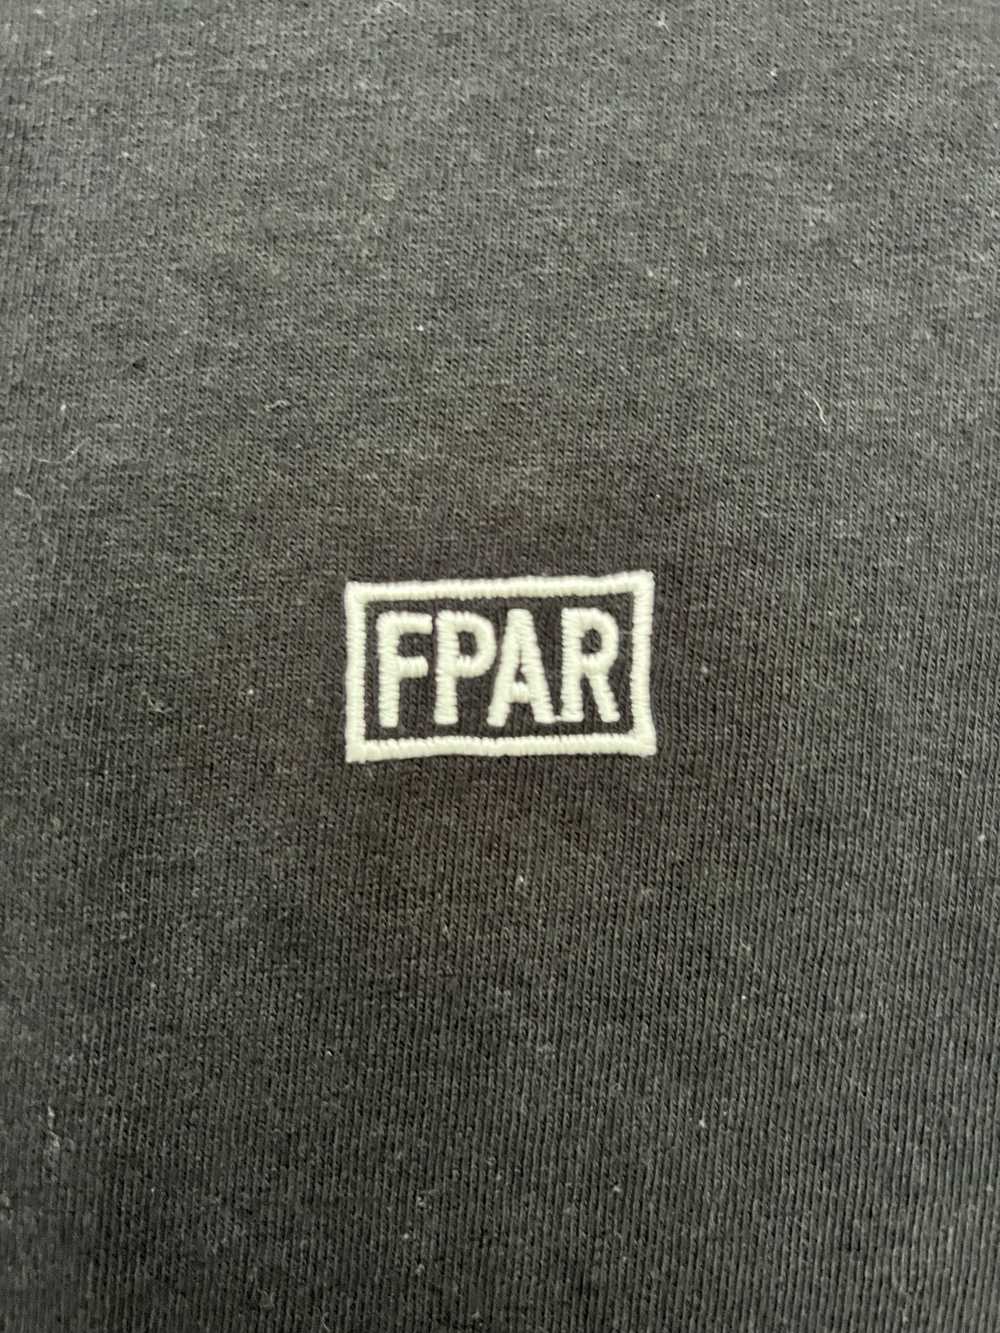 Forty Percent Against Rights (Fpar) × Fpar × Vint… - image 3